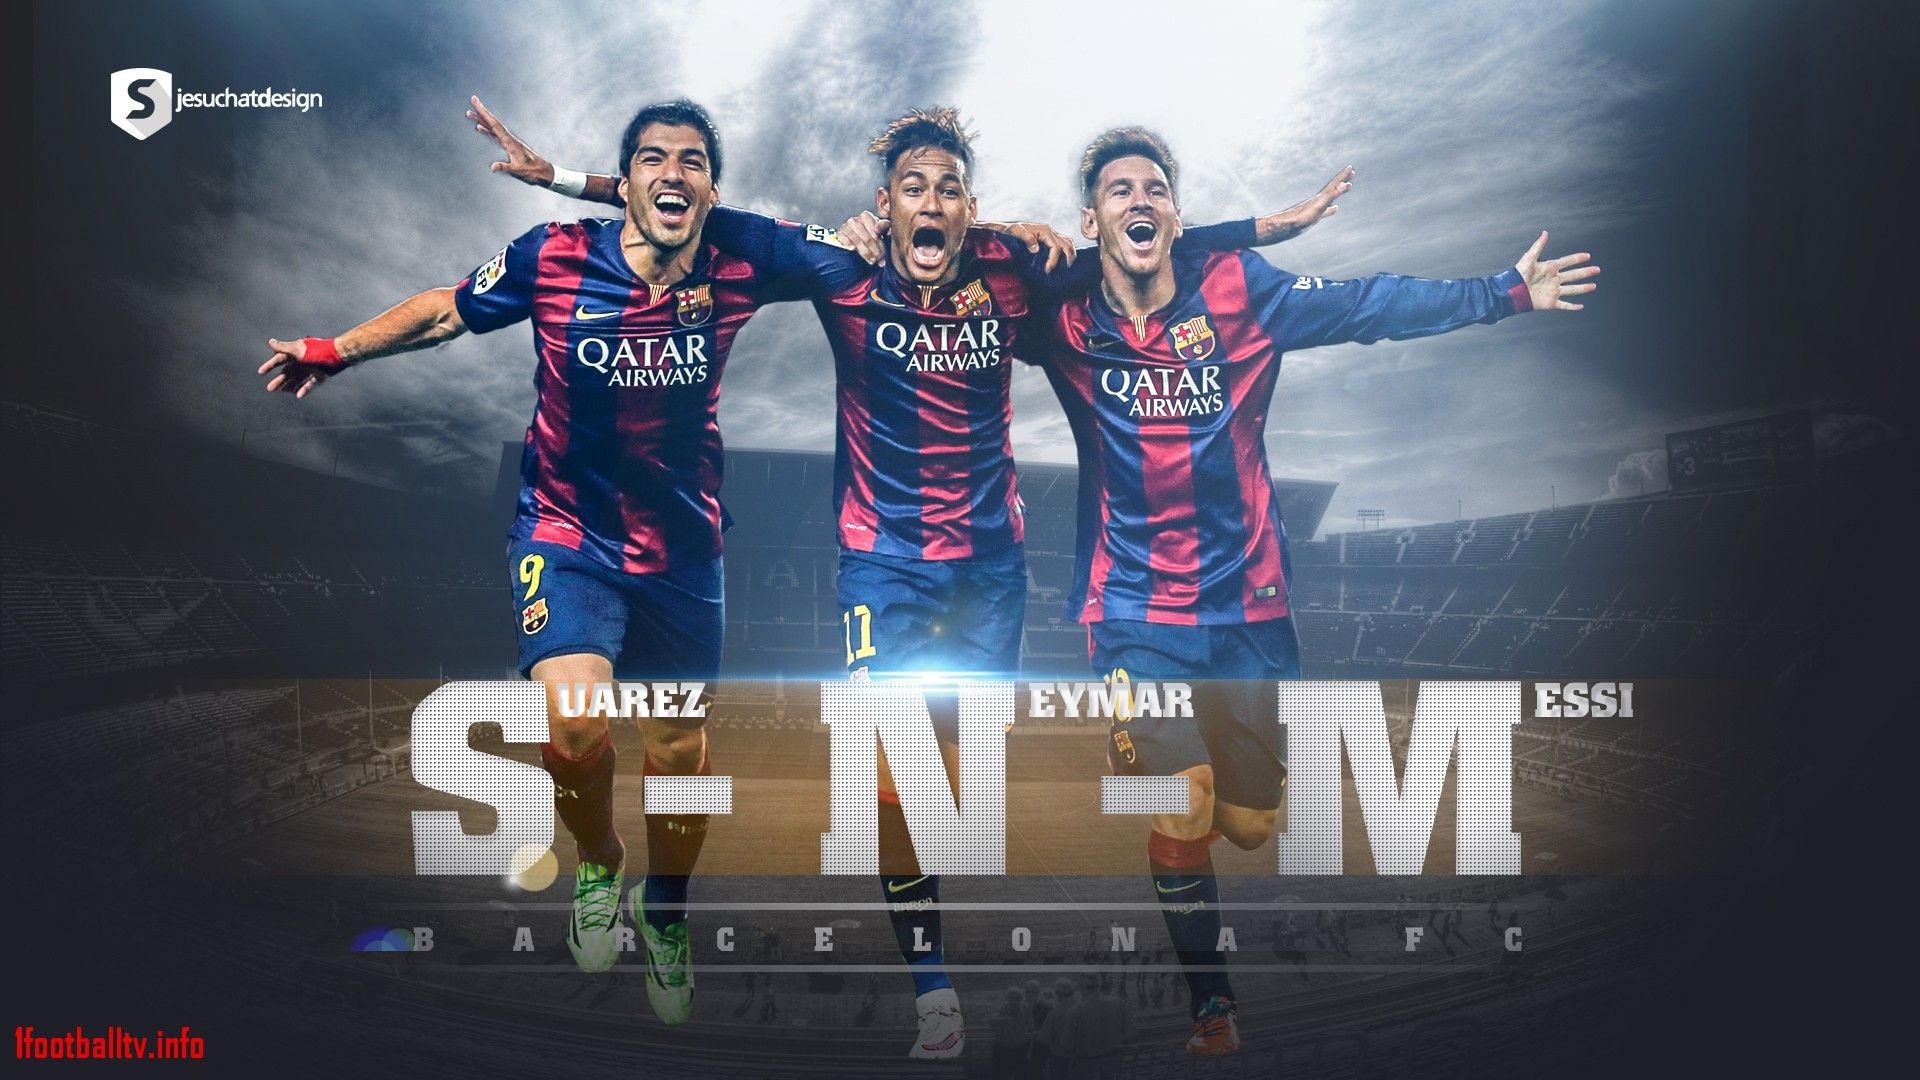 messi neymar suarez wallpaper hd,product,team,jersey,poster,technology